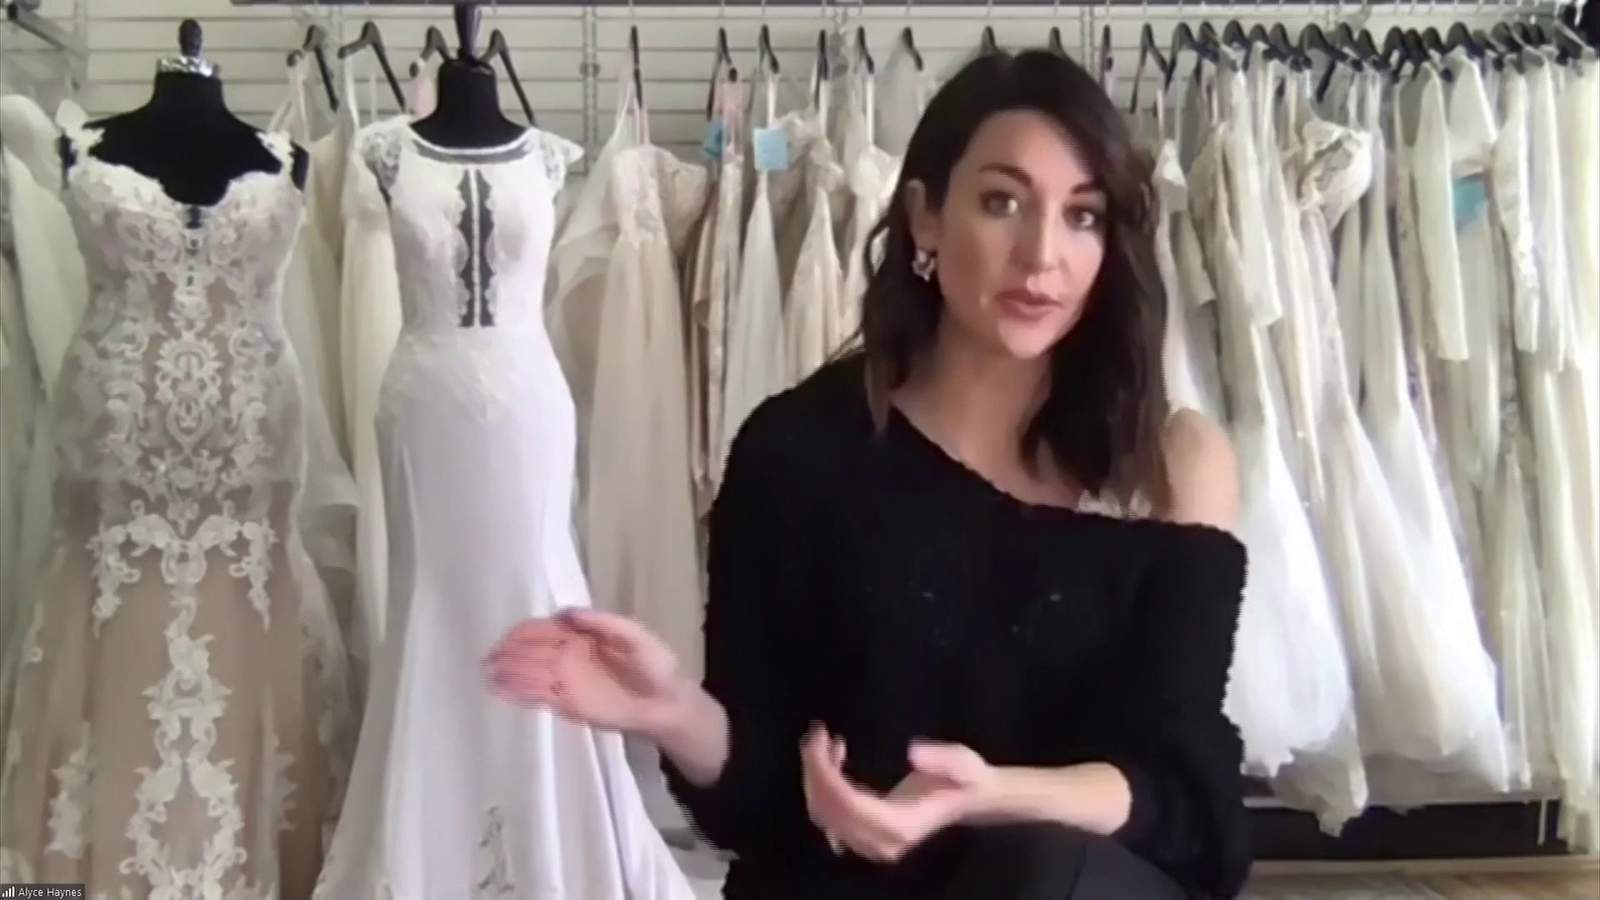 Salem boutique sells dresses for brides on a budget